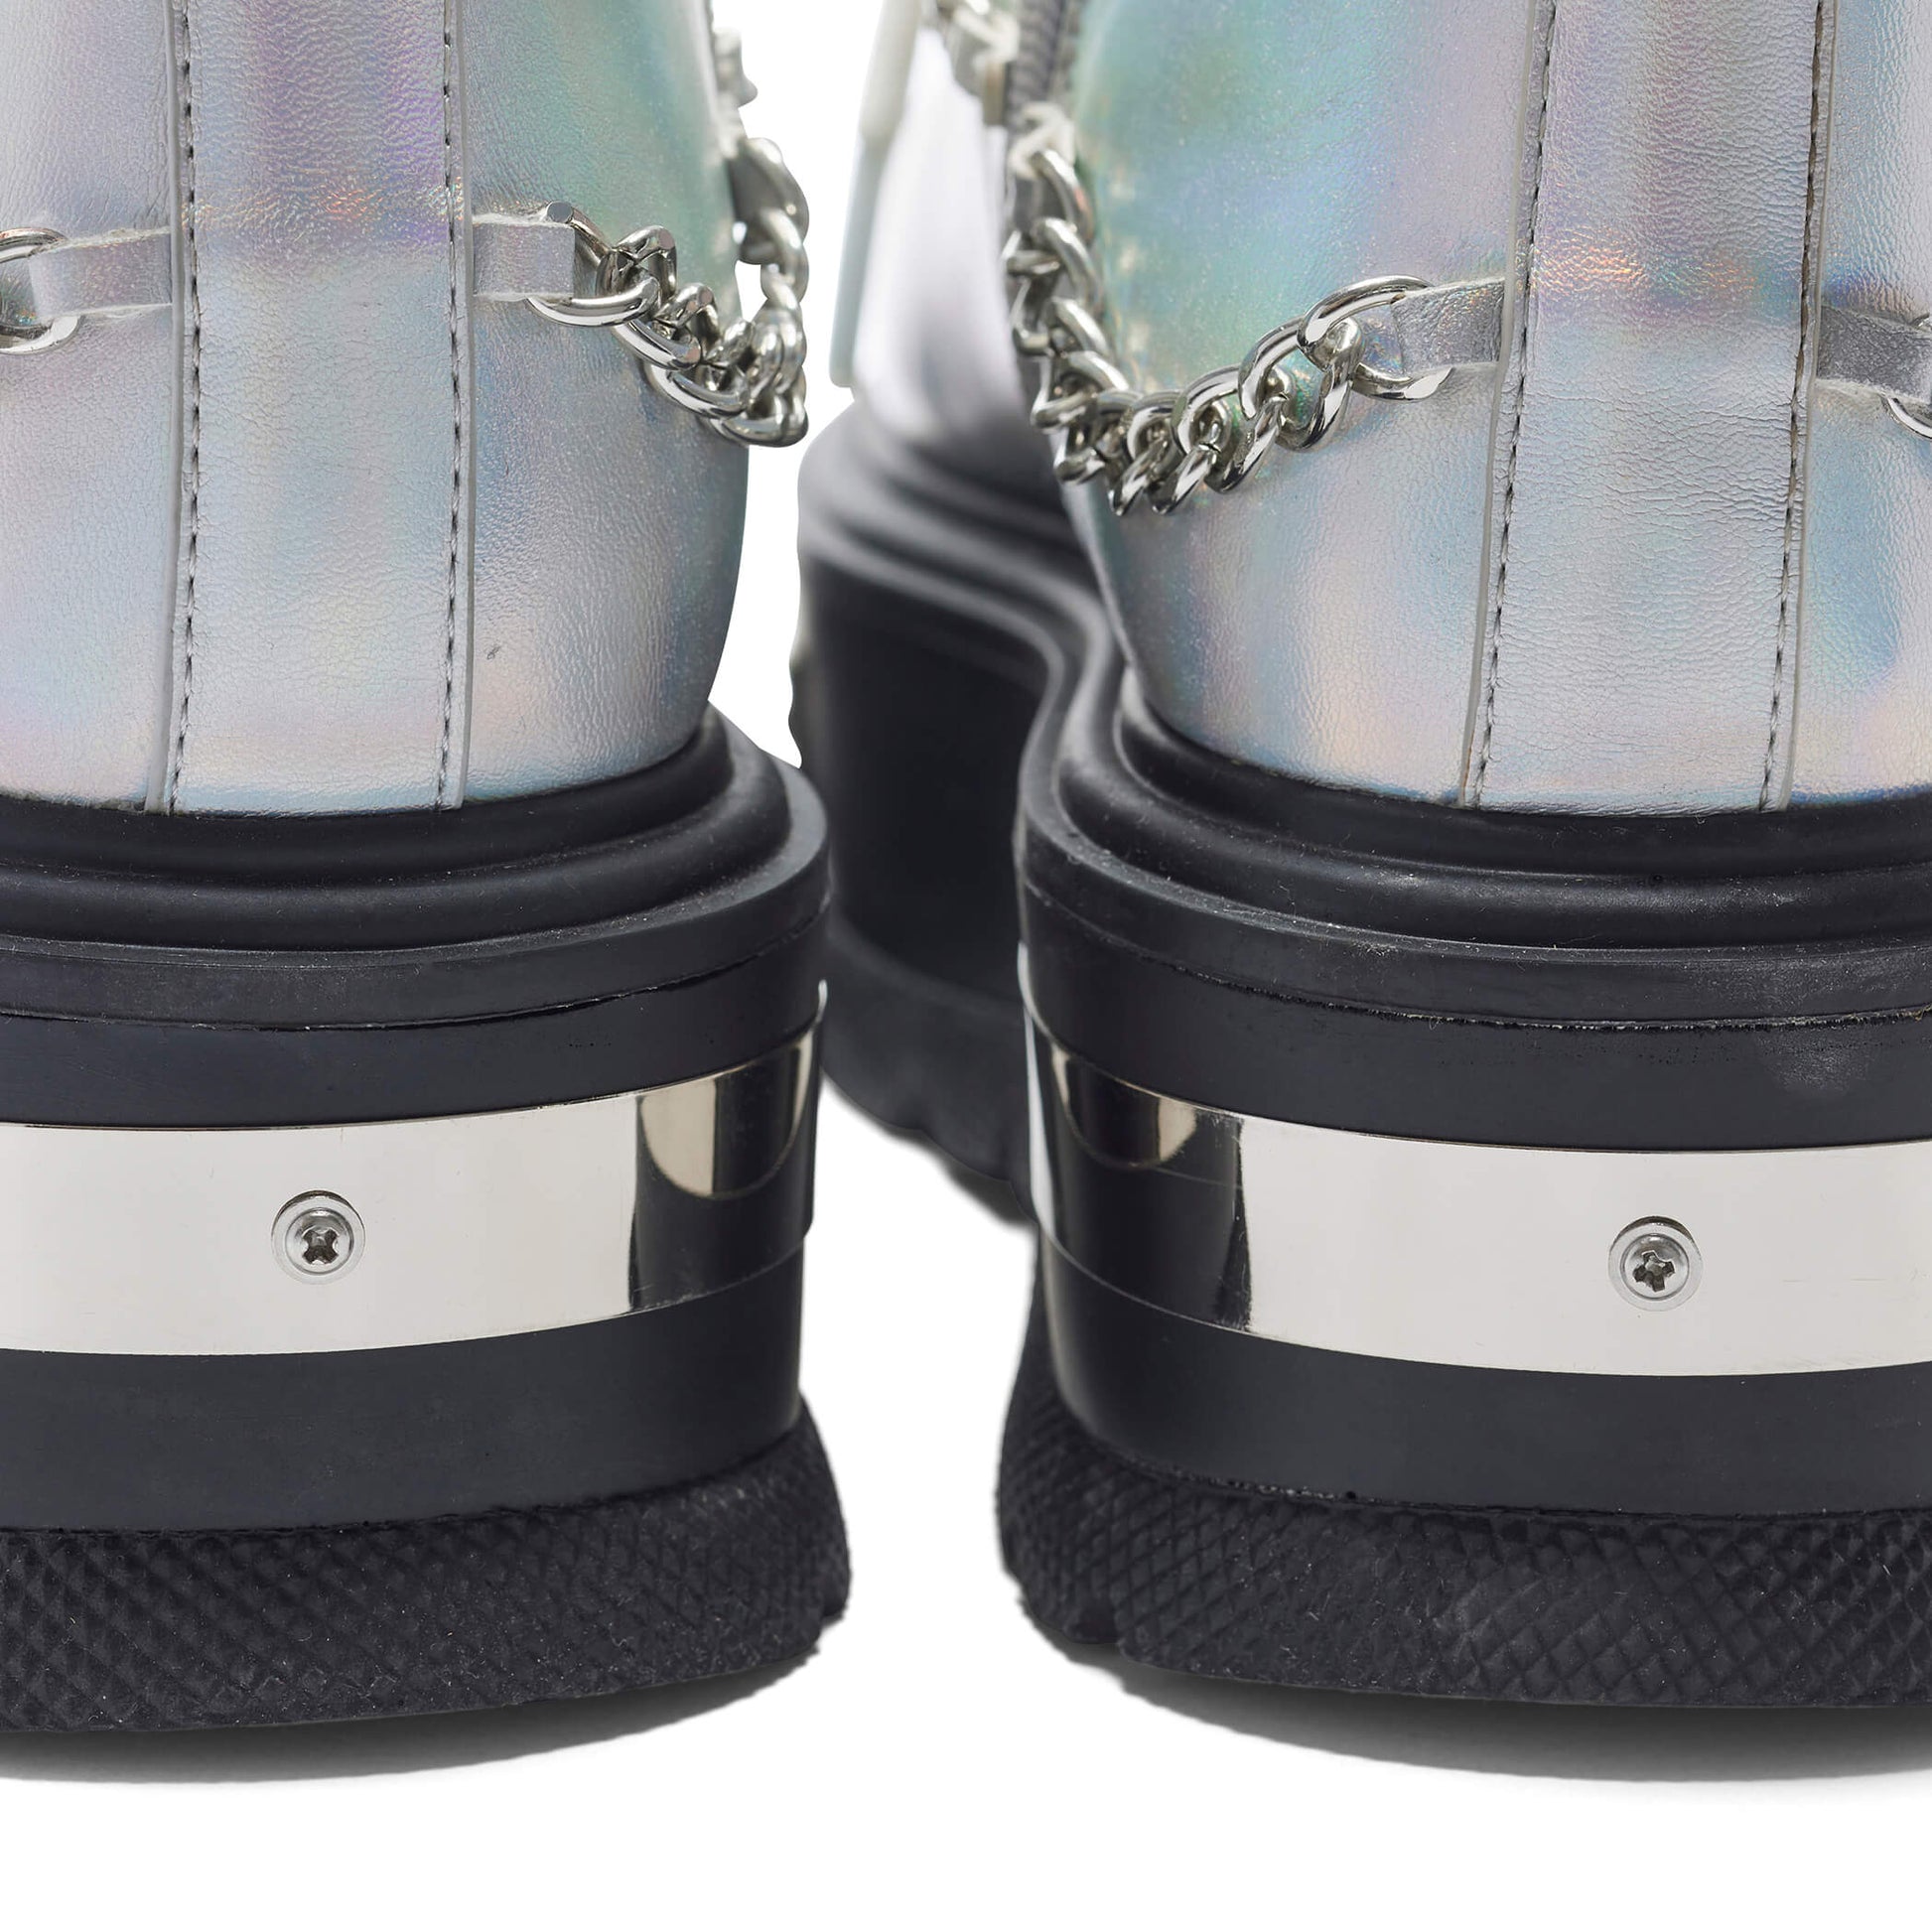 Borin Hardware Platform Boots - Silver Hologram - KOI Footwear - Platform View